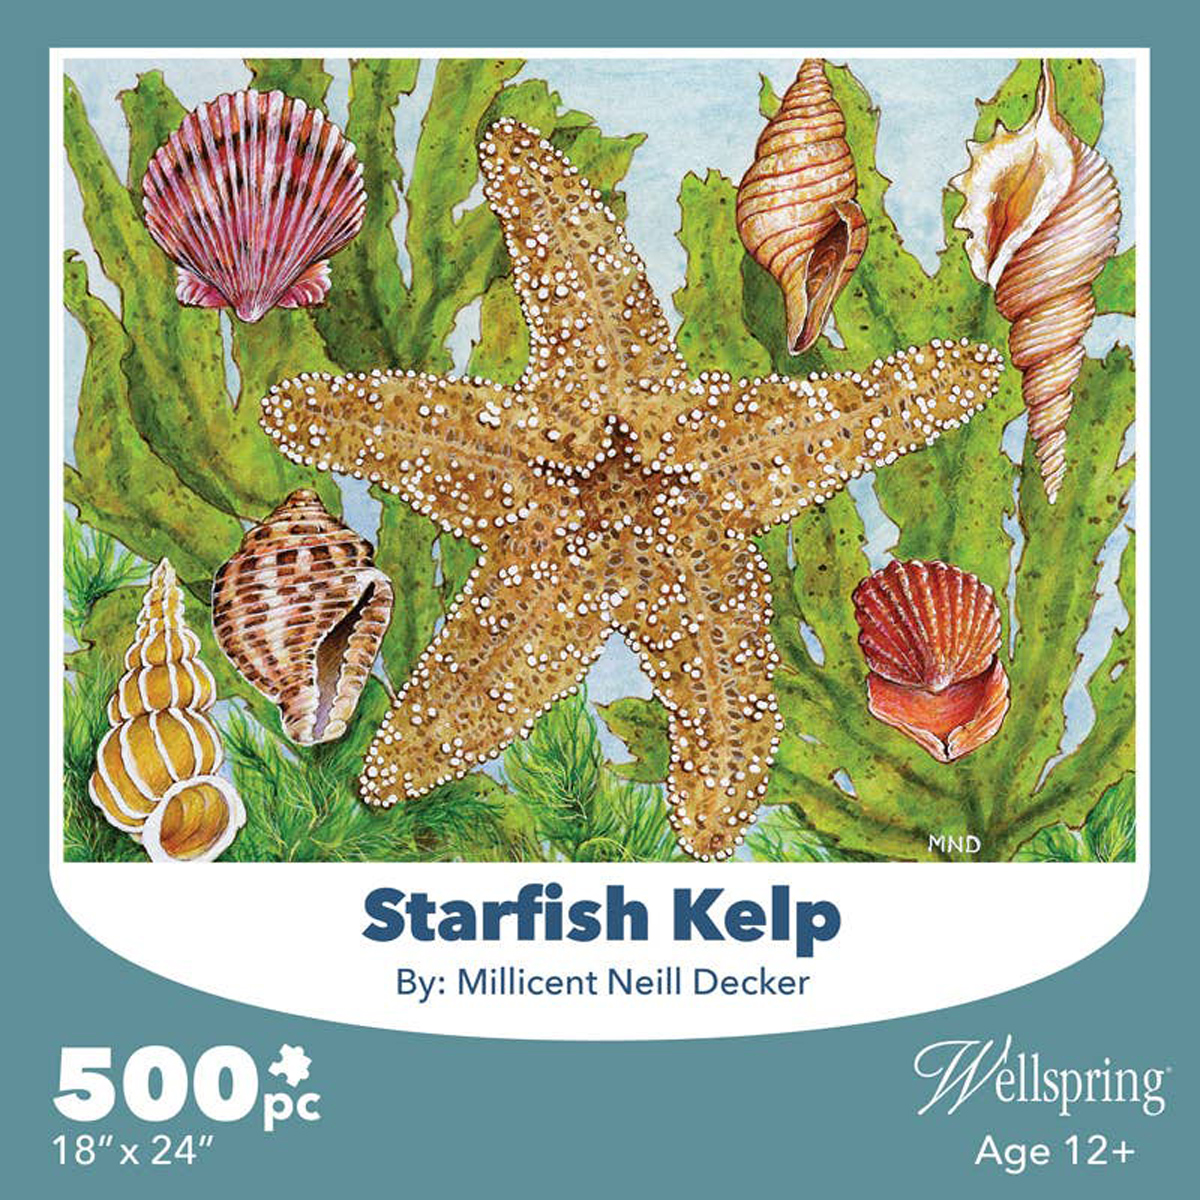 Starfish Kelp